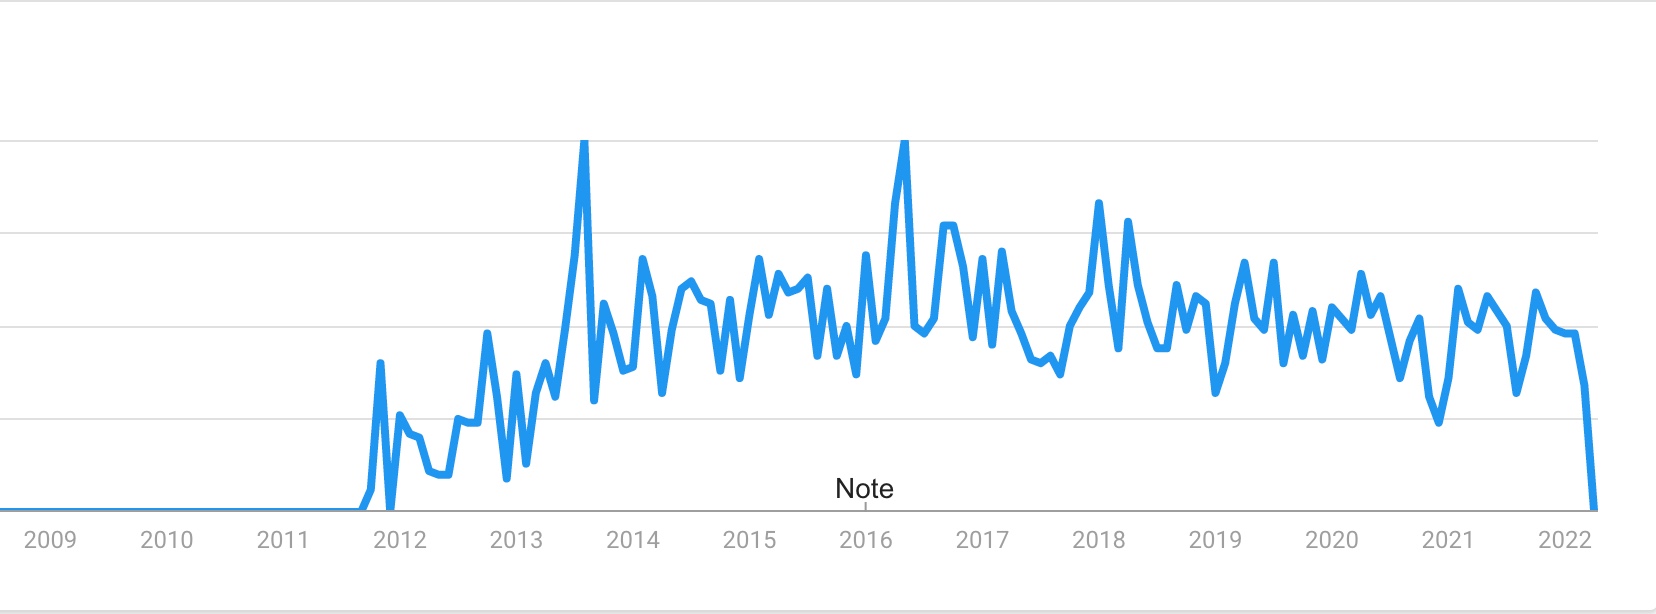 google trends term newsjacking